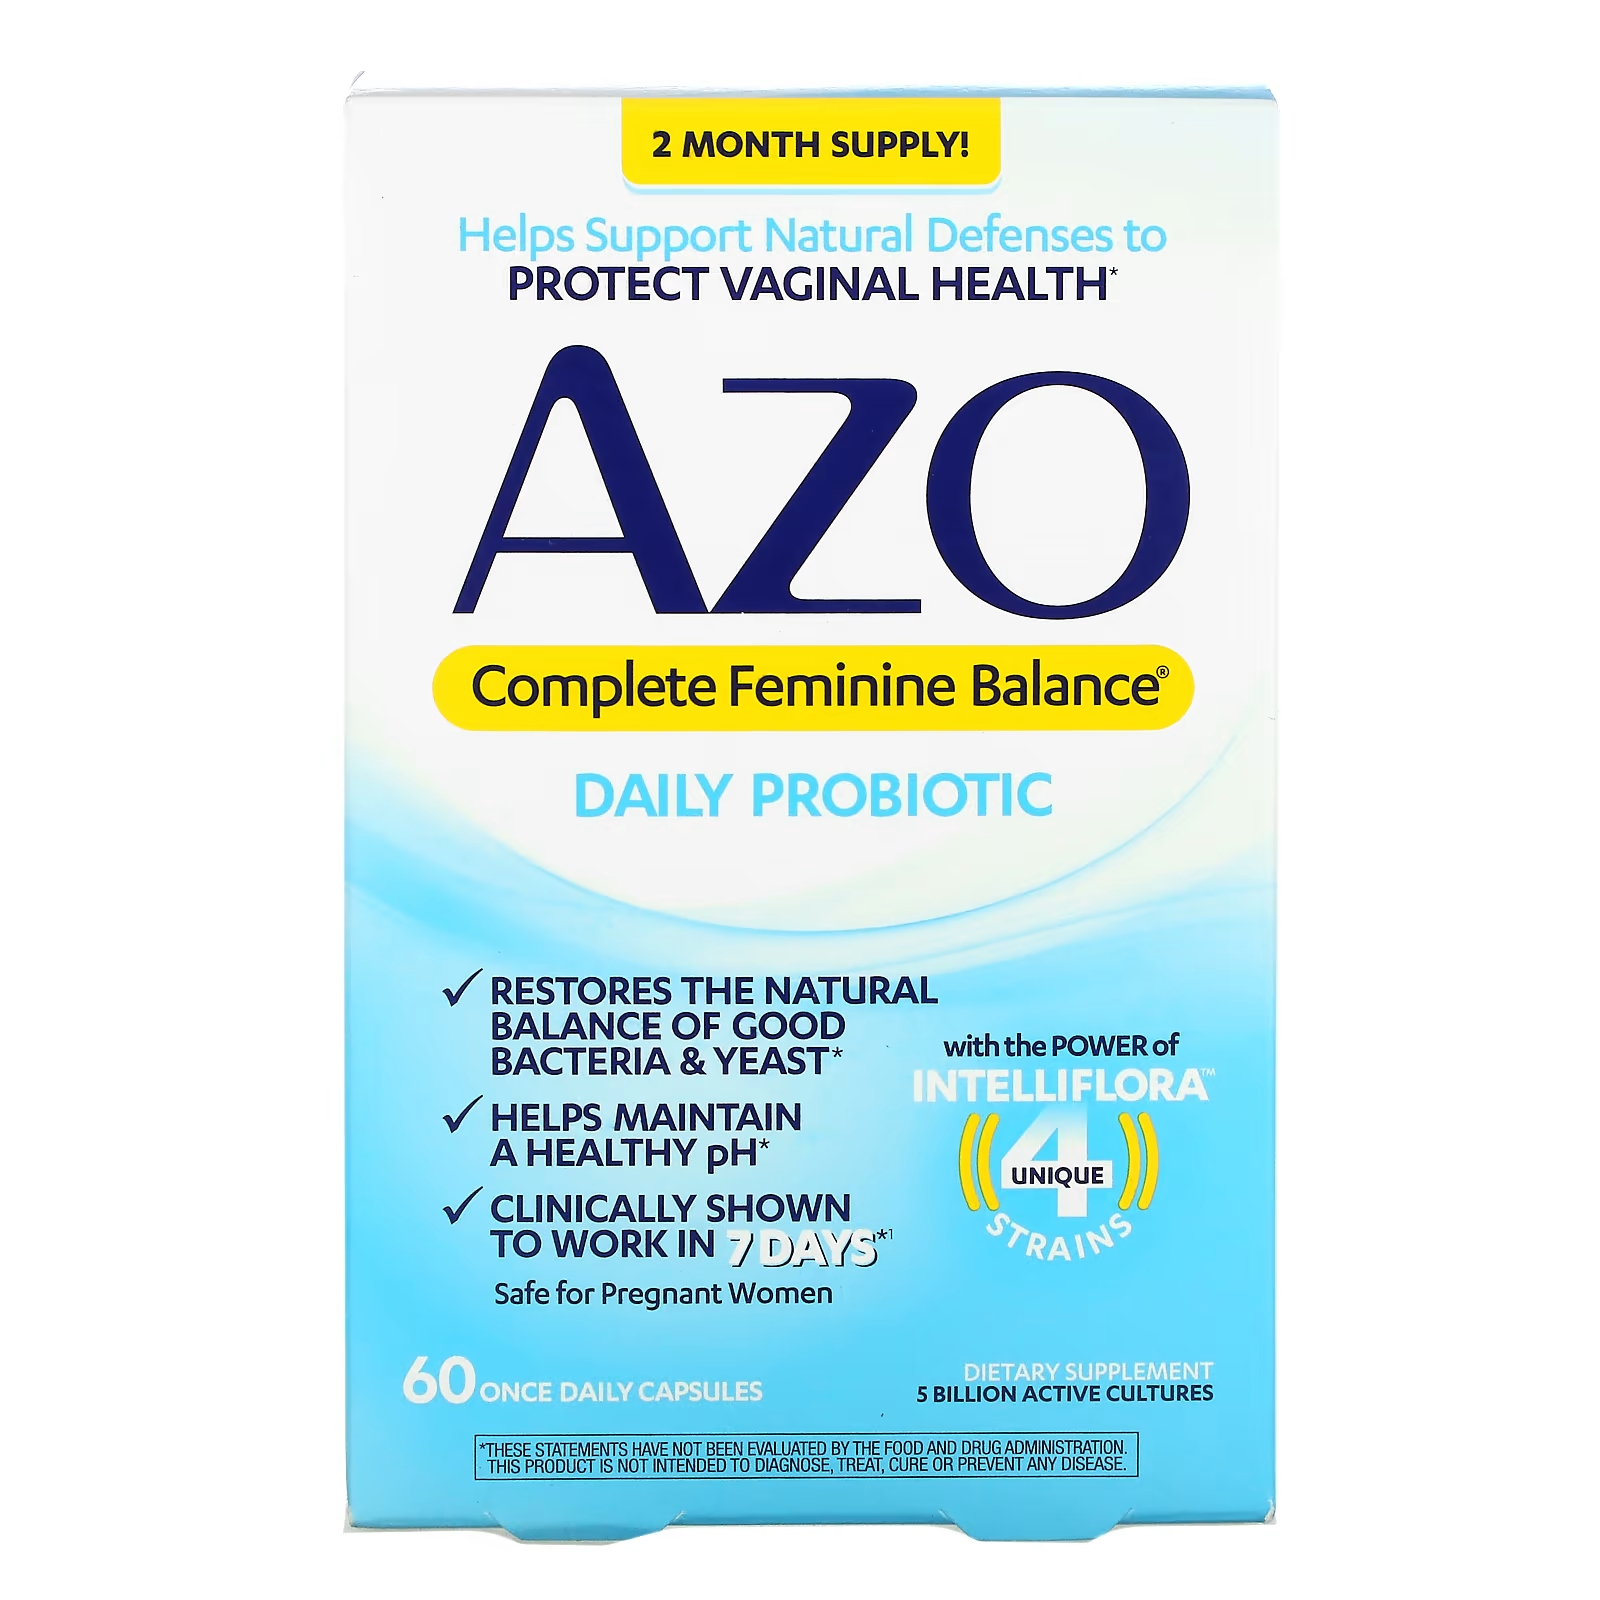 Azo Complete Feminine Balance Daily Probiotic 5 миллиардов 60 капсул один раз в день azo complete feminine balance daily probiotic 5 миллиардов 60 капсул один раз в день